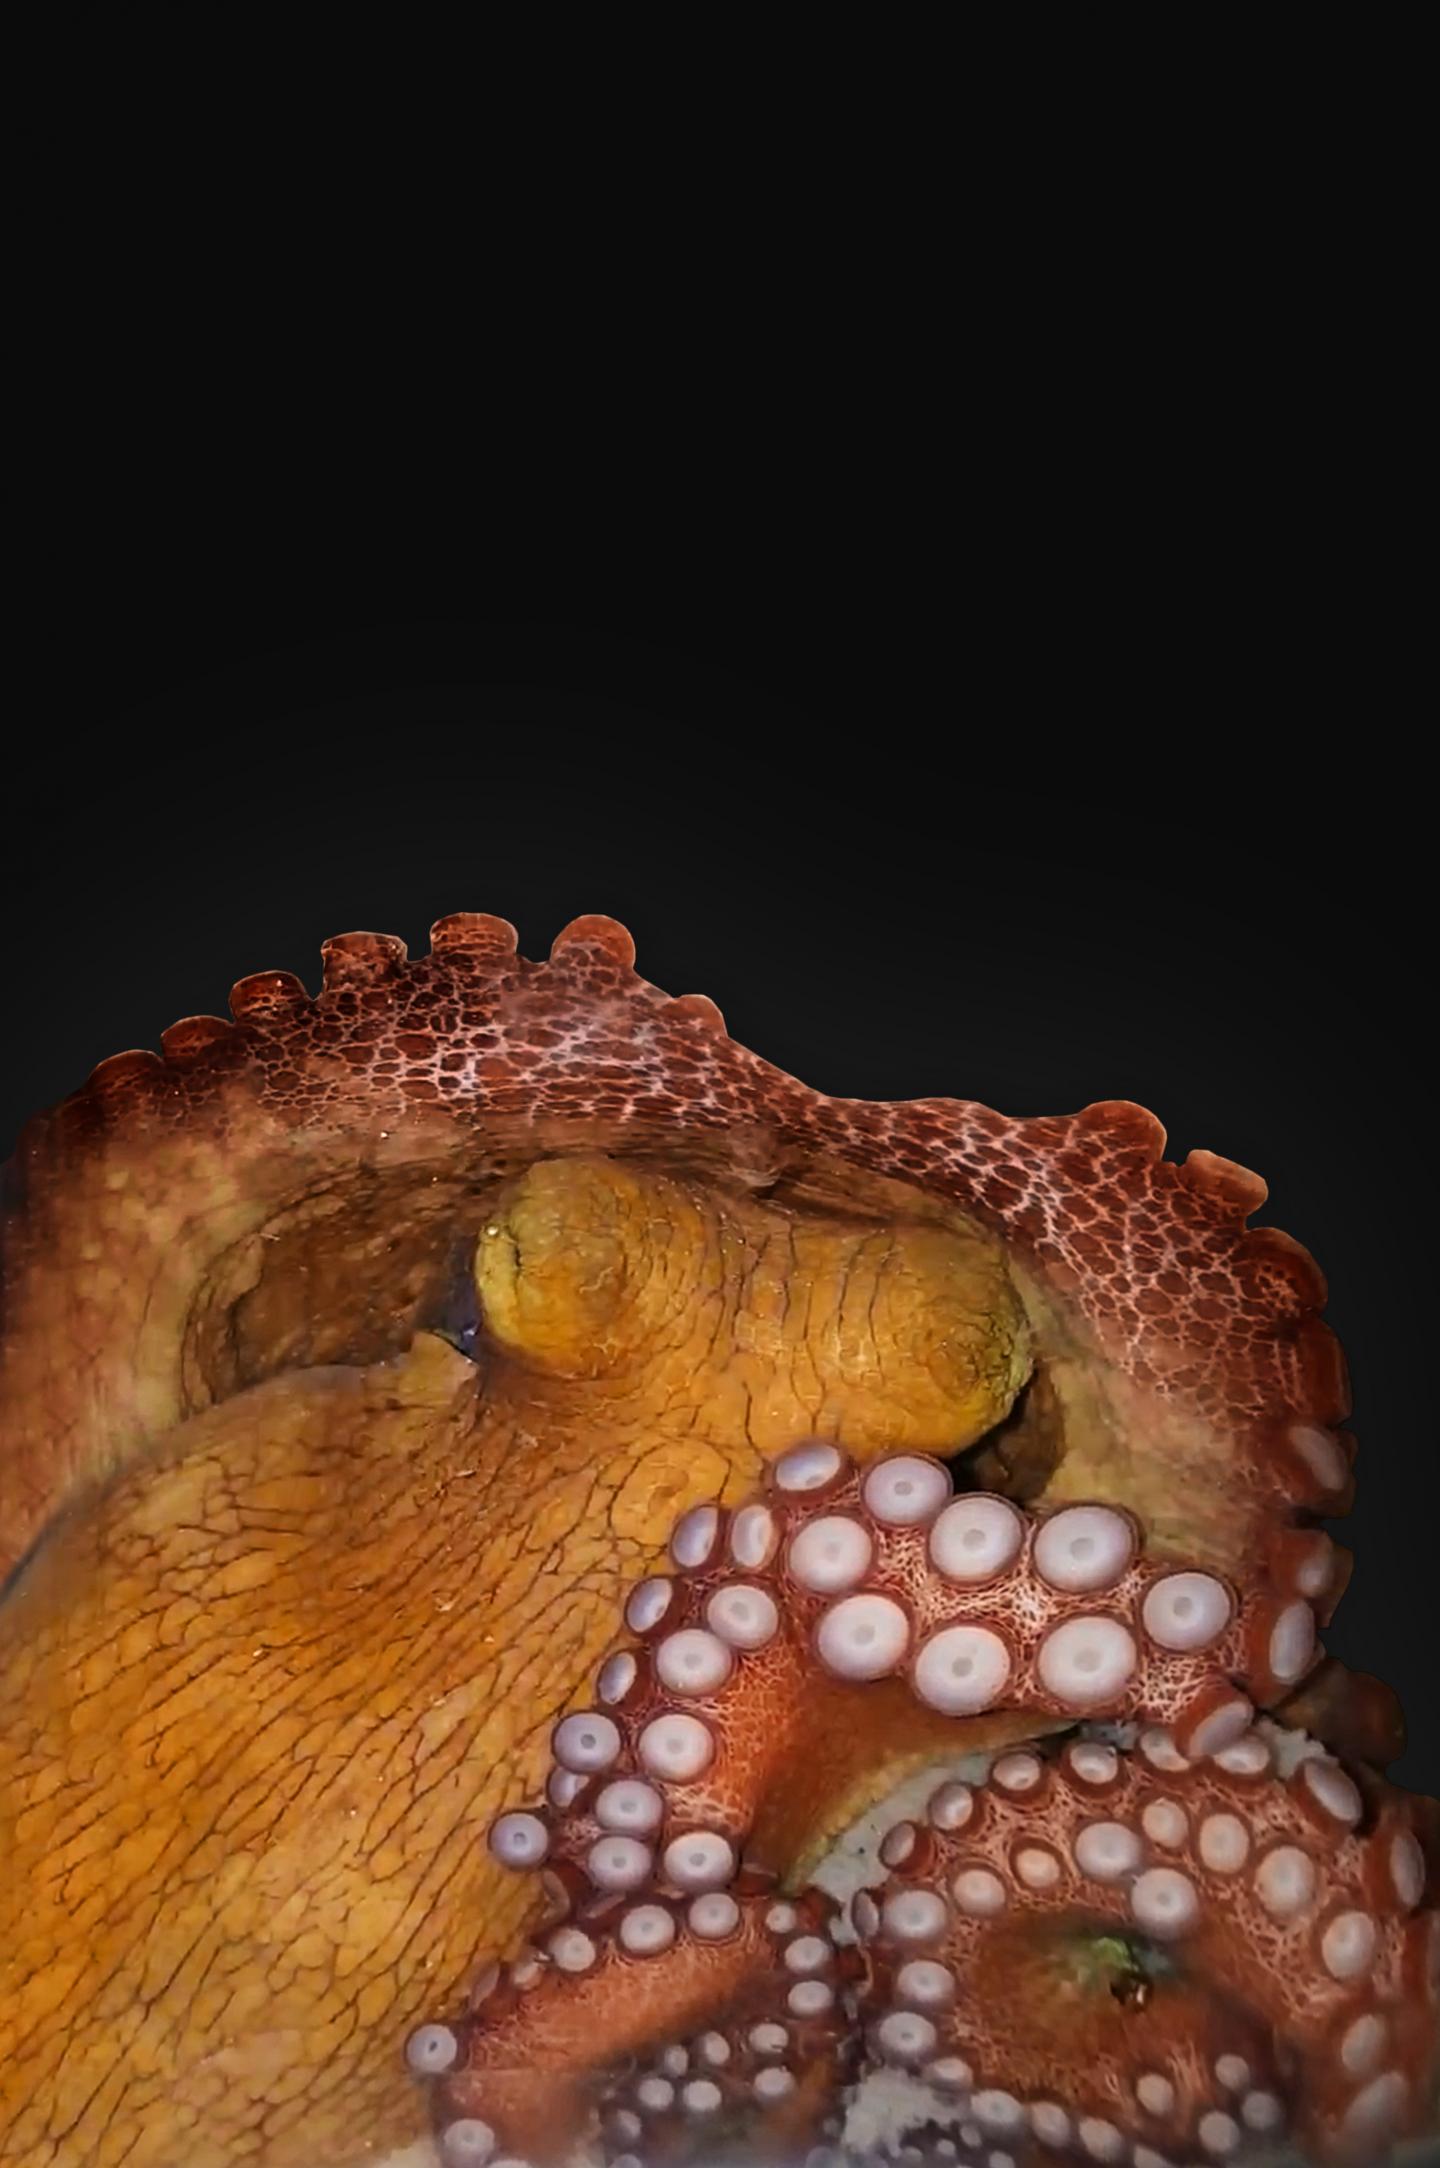 An octopus during active sleep.  (Image: Sylvia L. S. Madeiros)